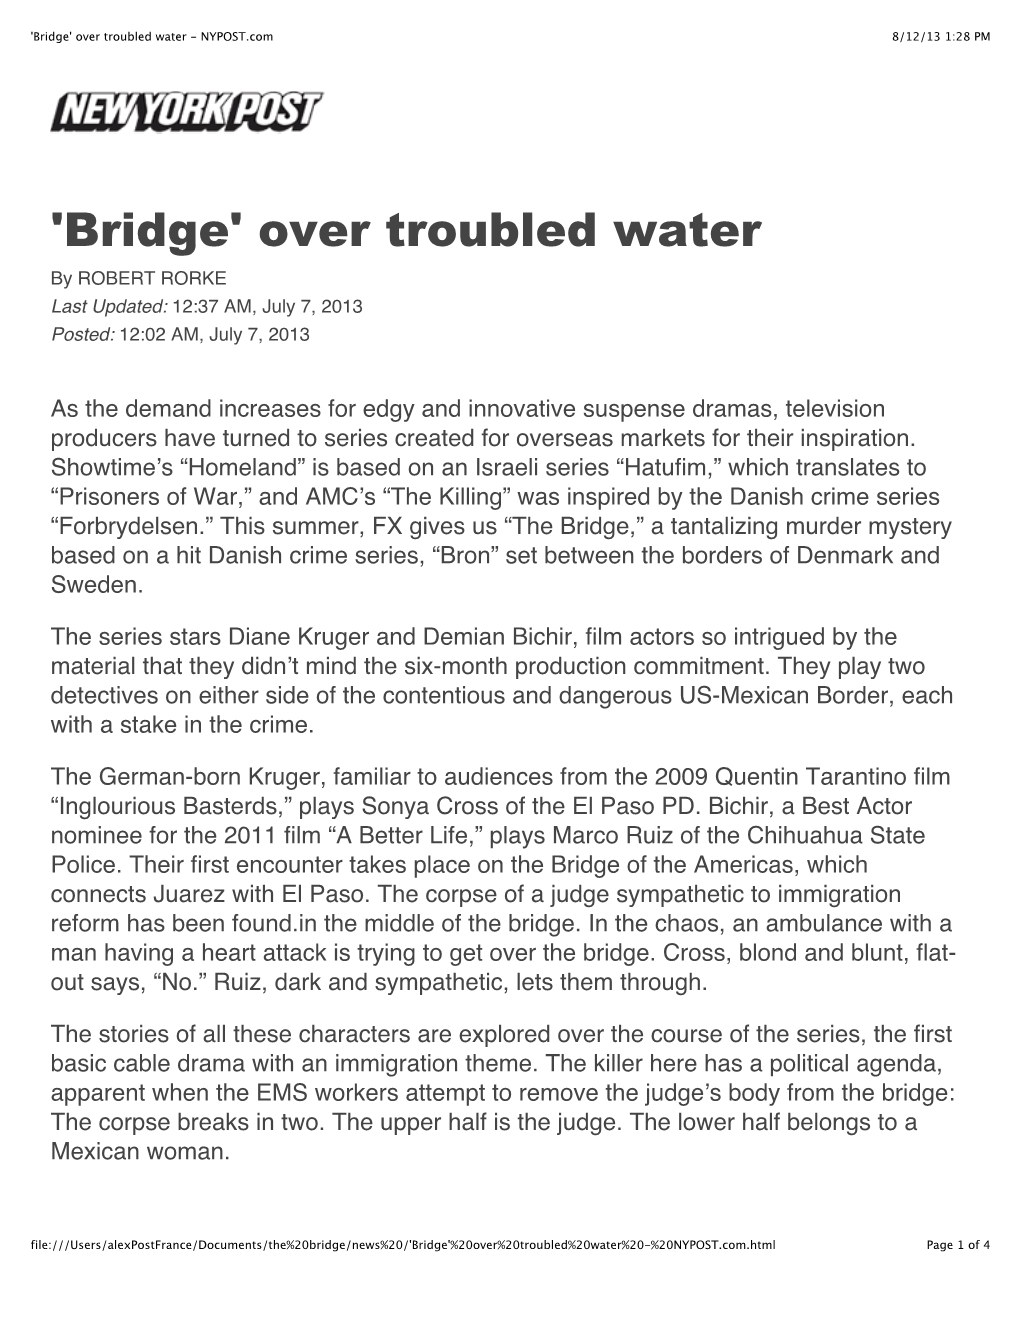 'Bridge' Over Troubled Water - NYPOST.Com 8/12/13 1:28 PM